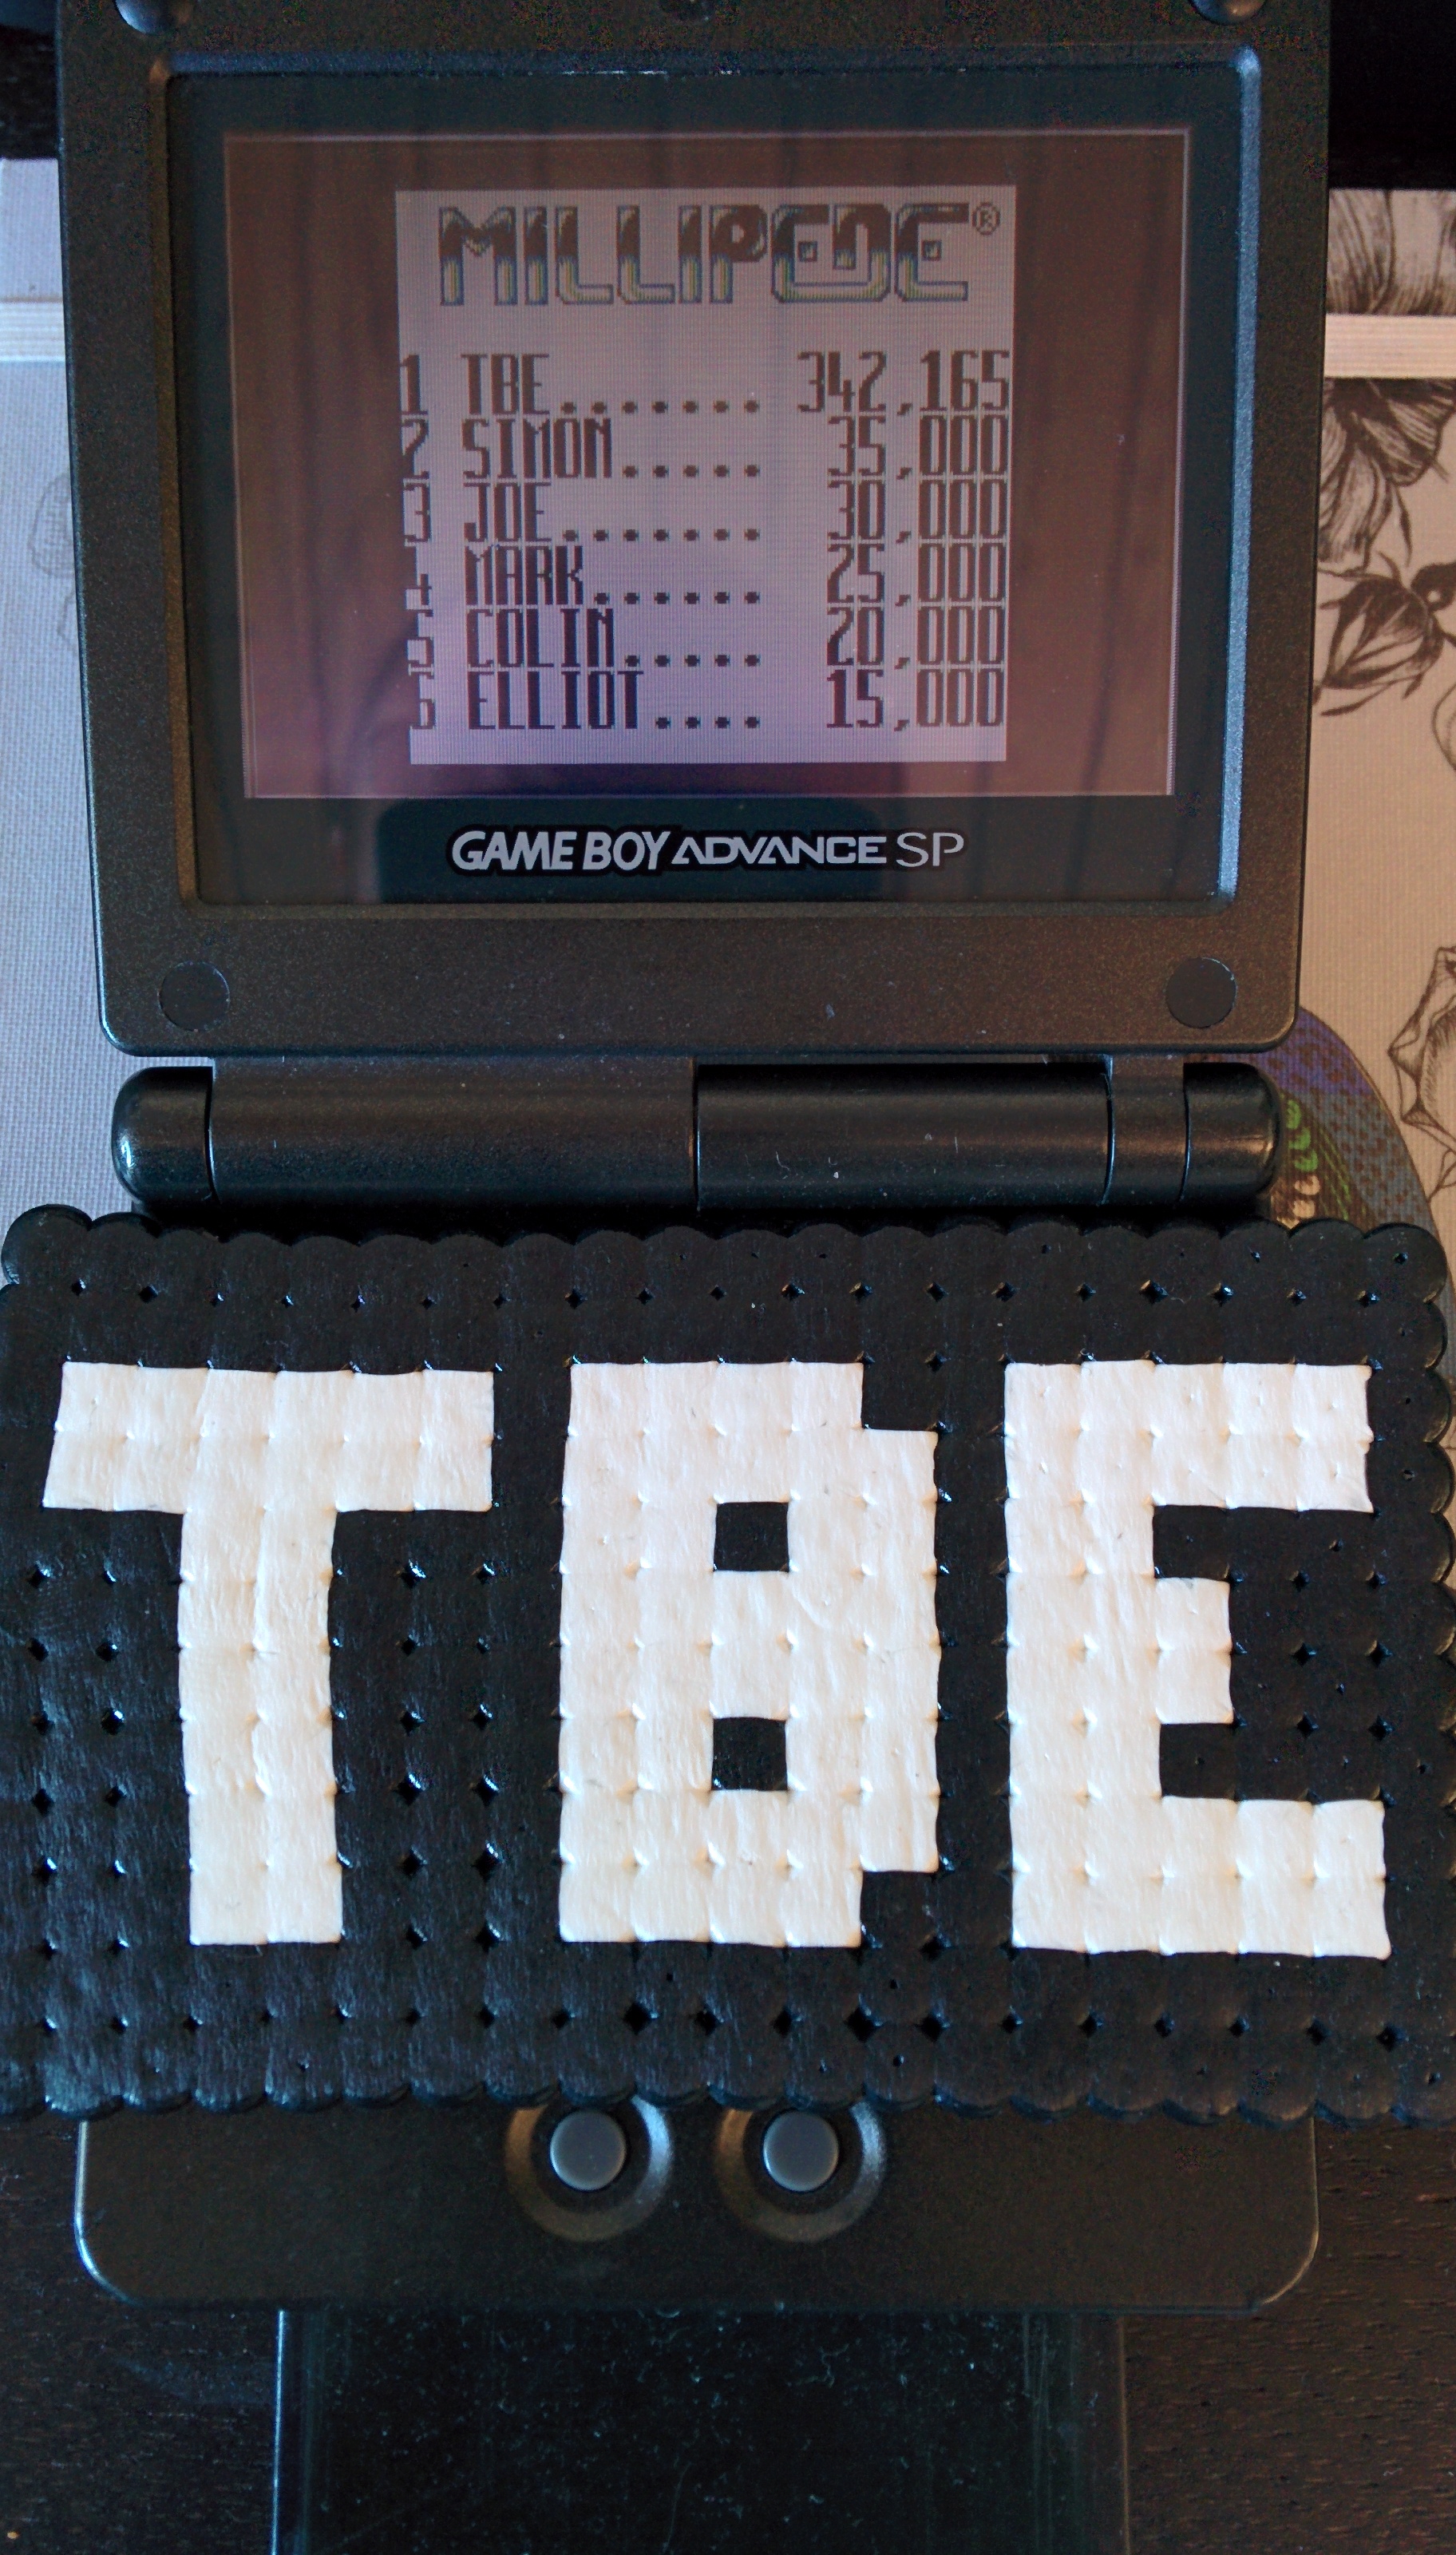 Sixx: Millipede (Game Boy) 342,165 points on 2014-09-03 08:27:12